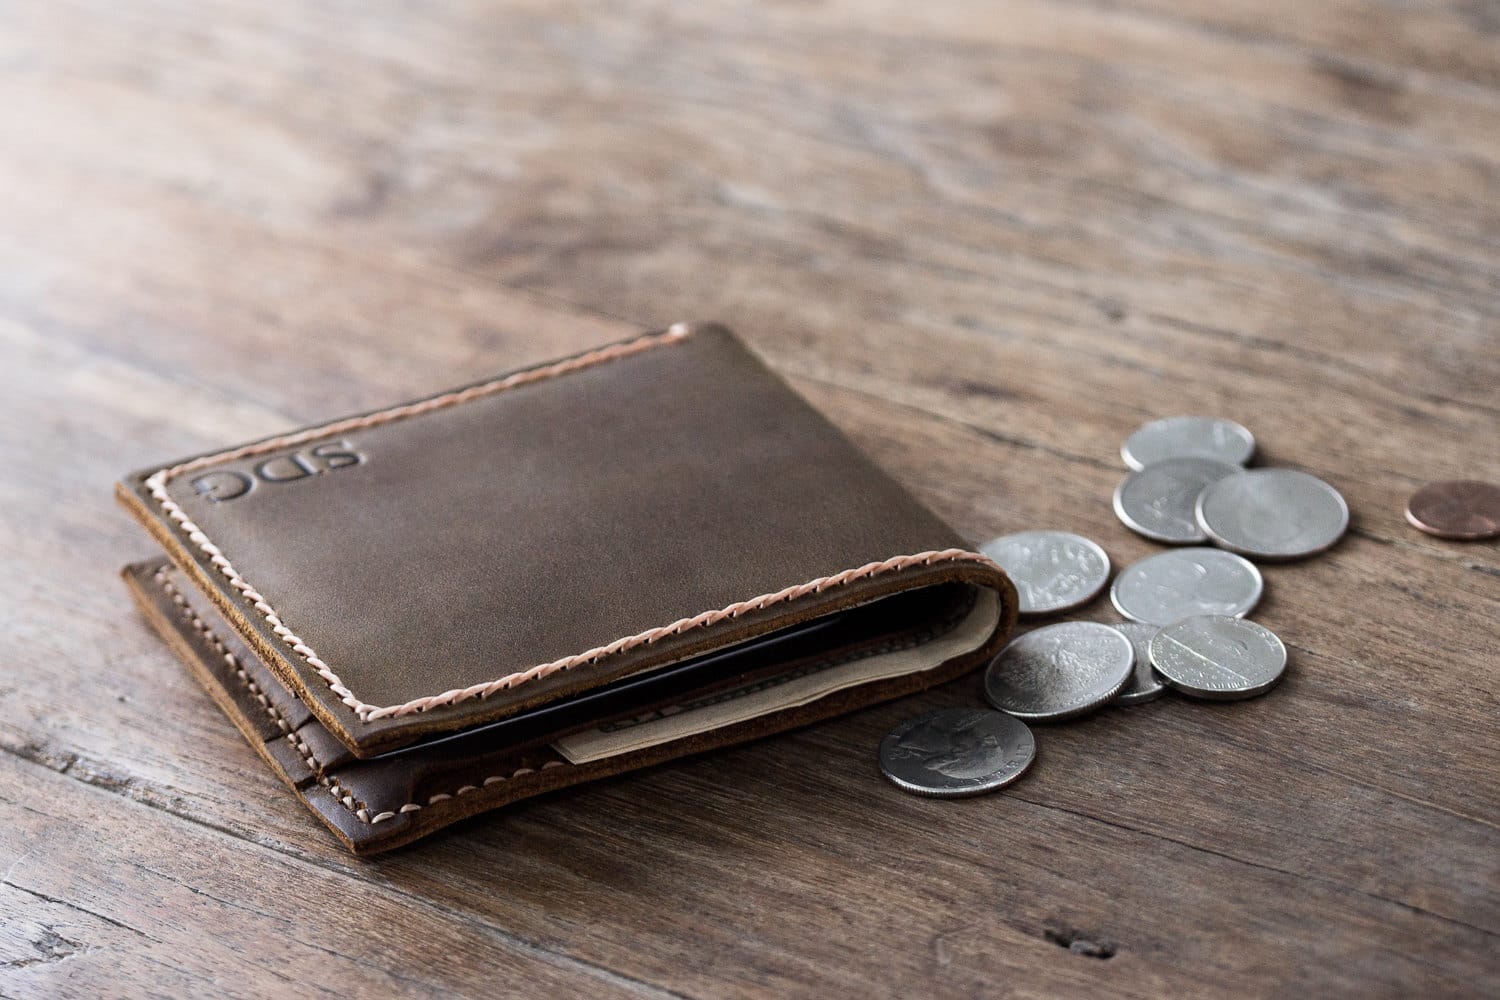 Leather Coin Pocket Wallet | Handmade Original Design by JooJoobs